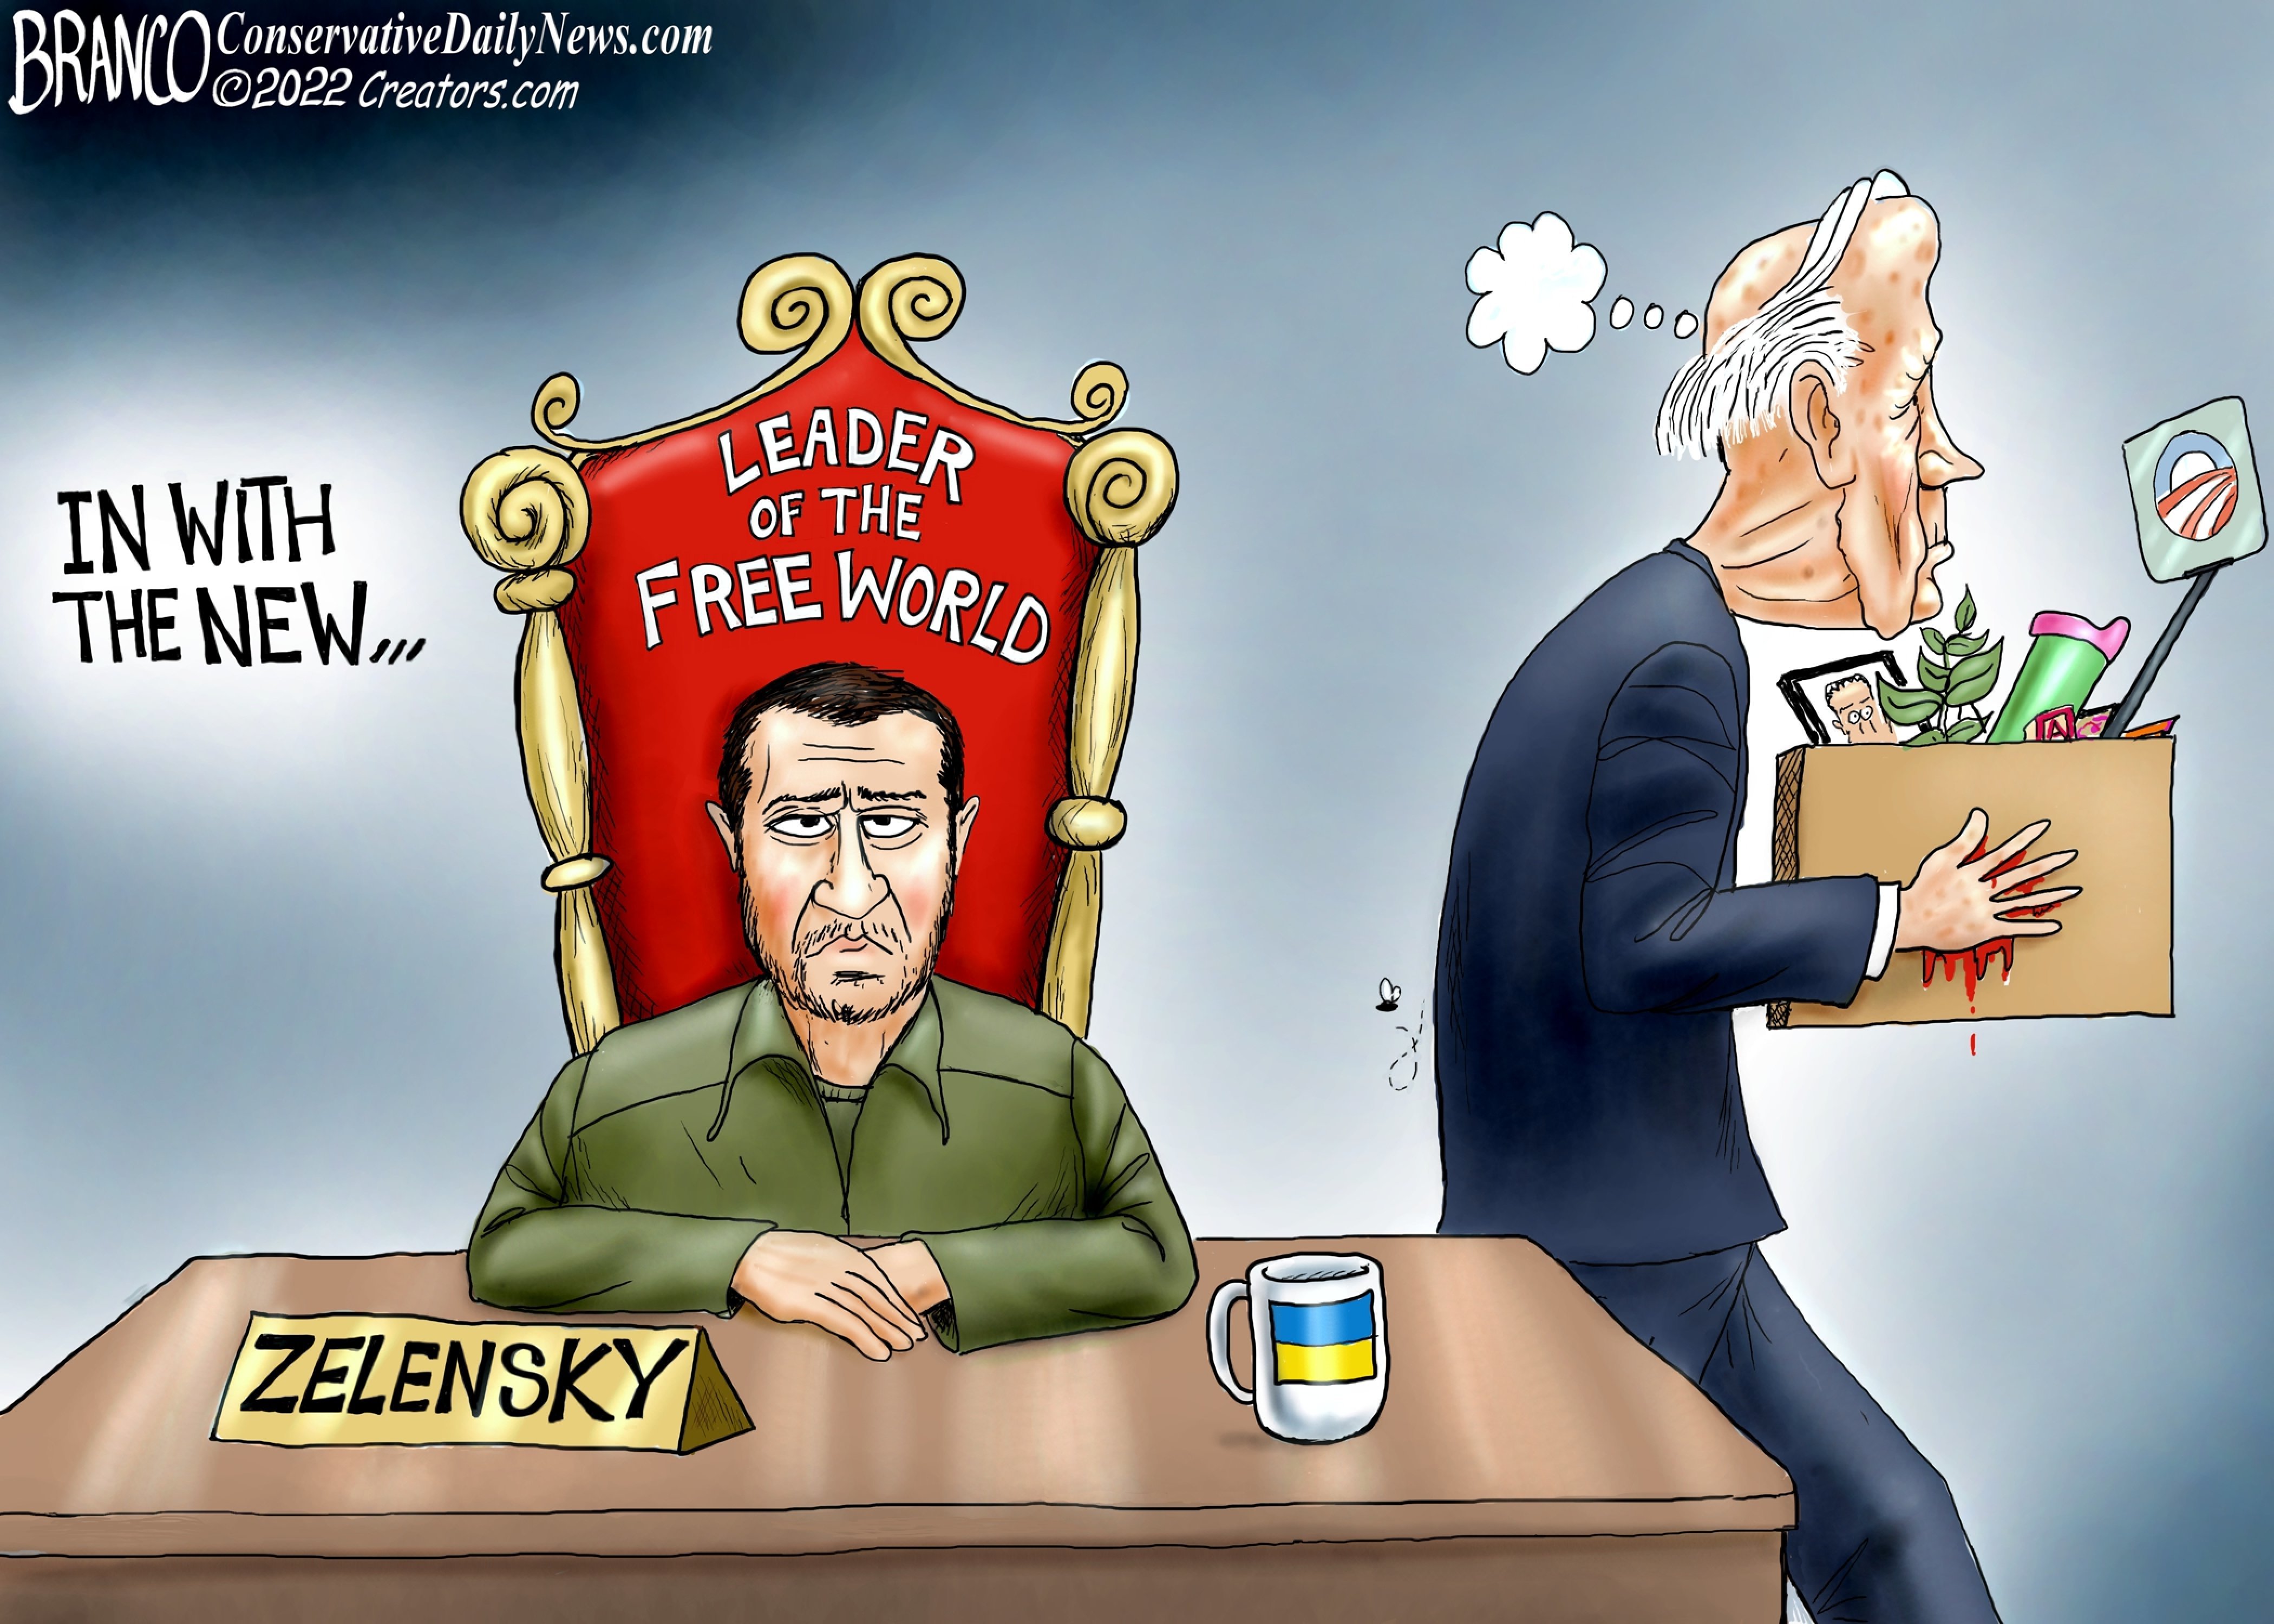 Editorial cartoons for March 20, 2022: Zelenskyy leadership, Ukraine toll -  